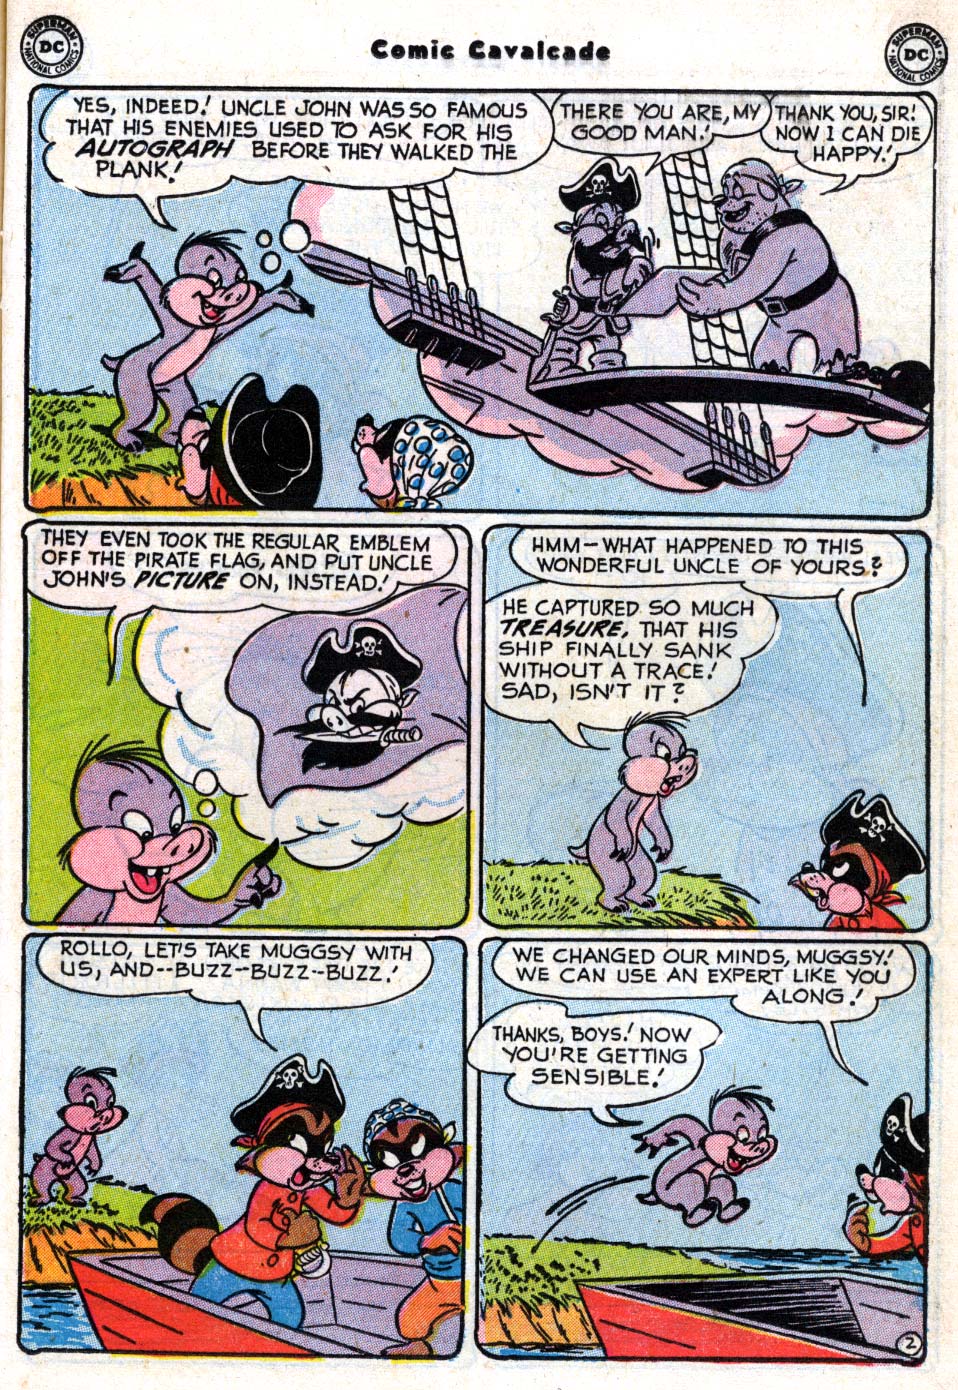 Comic Cavalcade issue 46 - Page 27